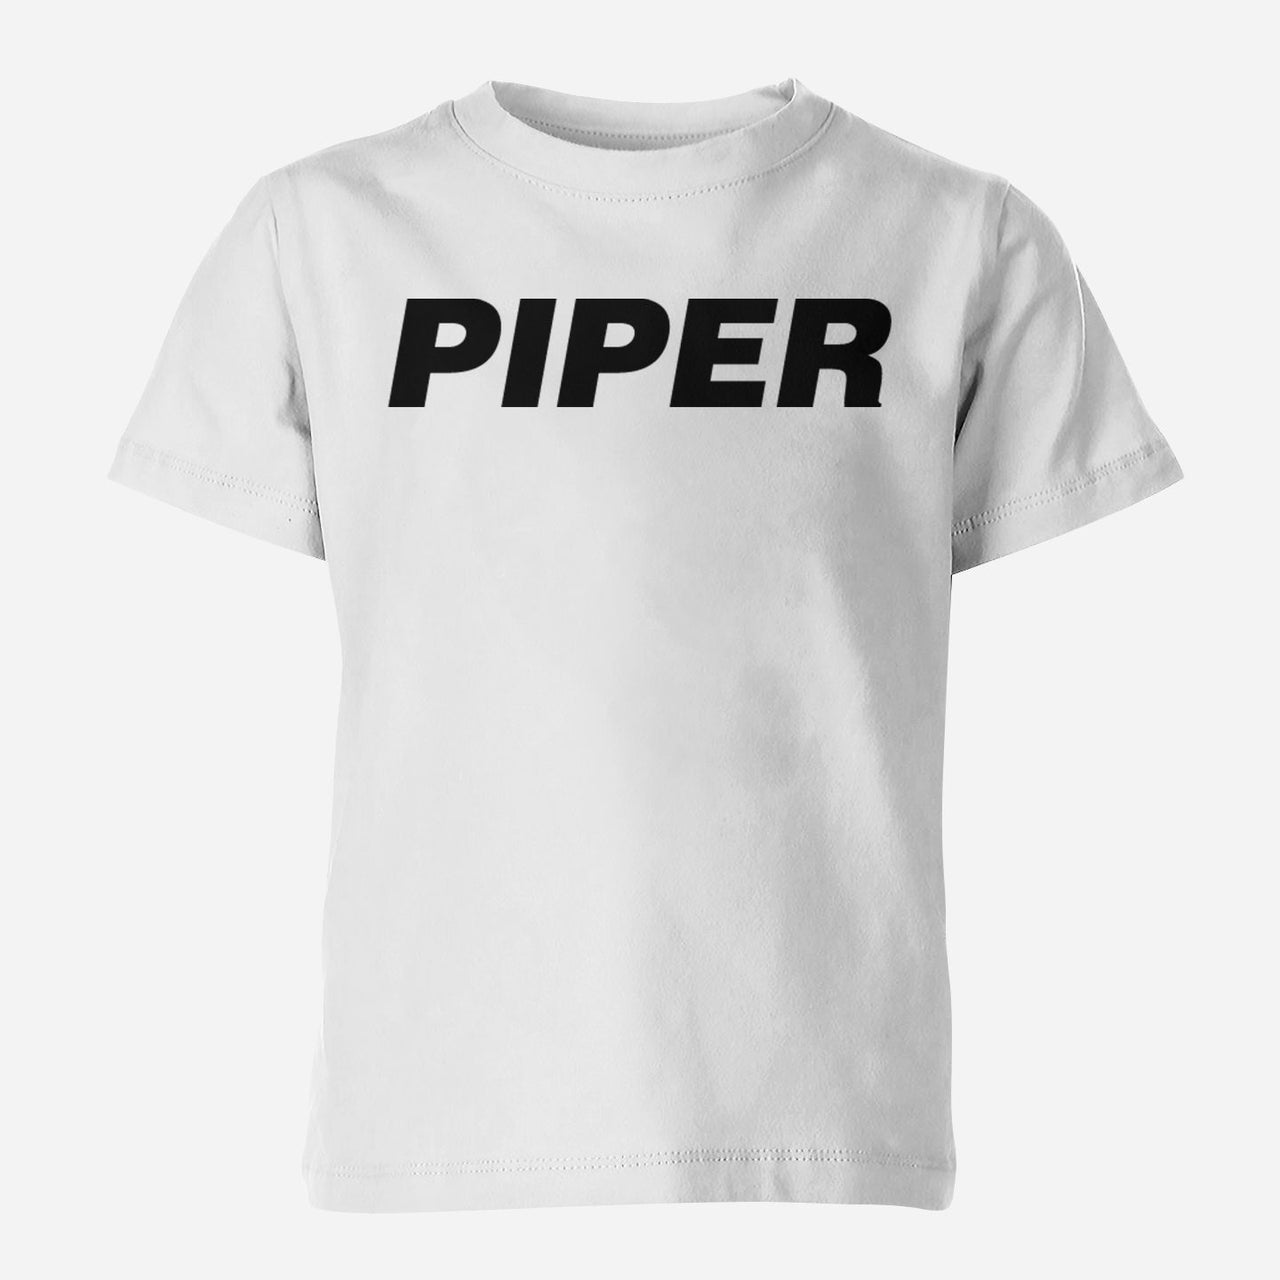 Piper & Text Designed Children T-Shirts